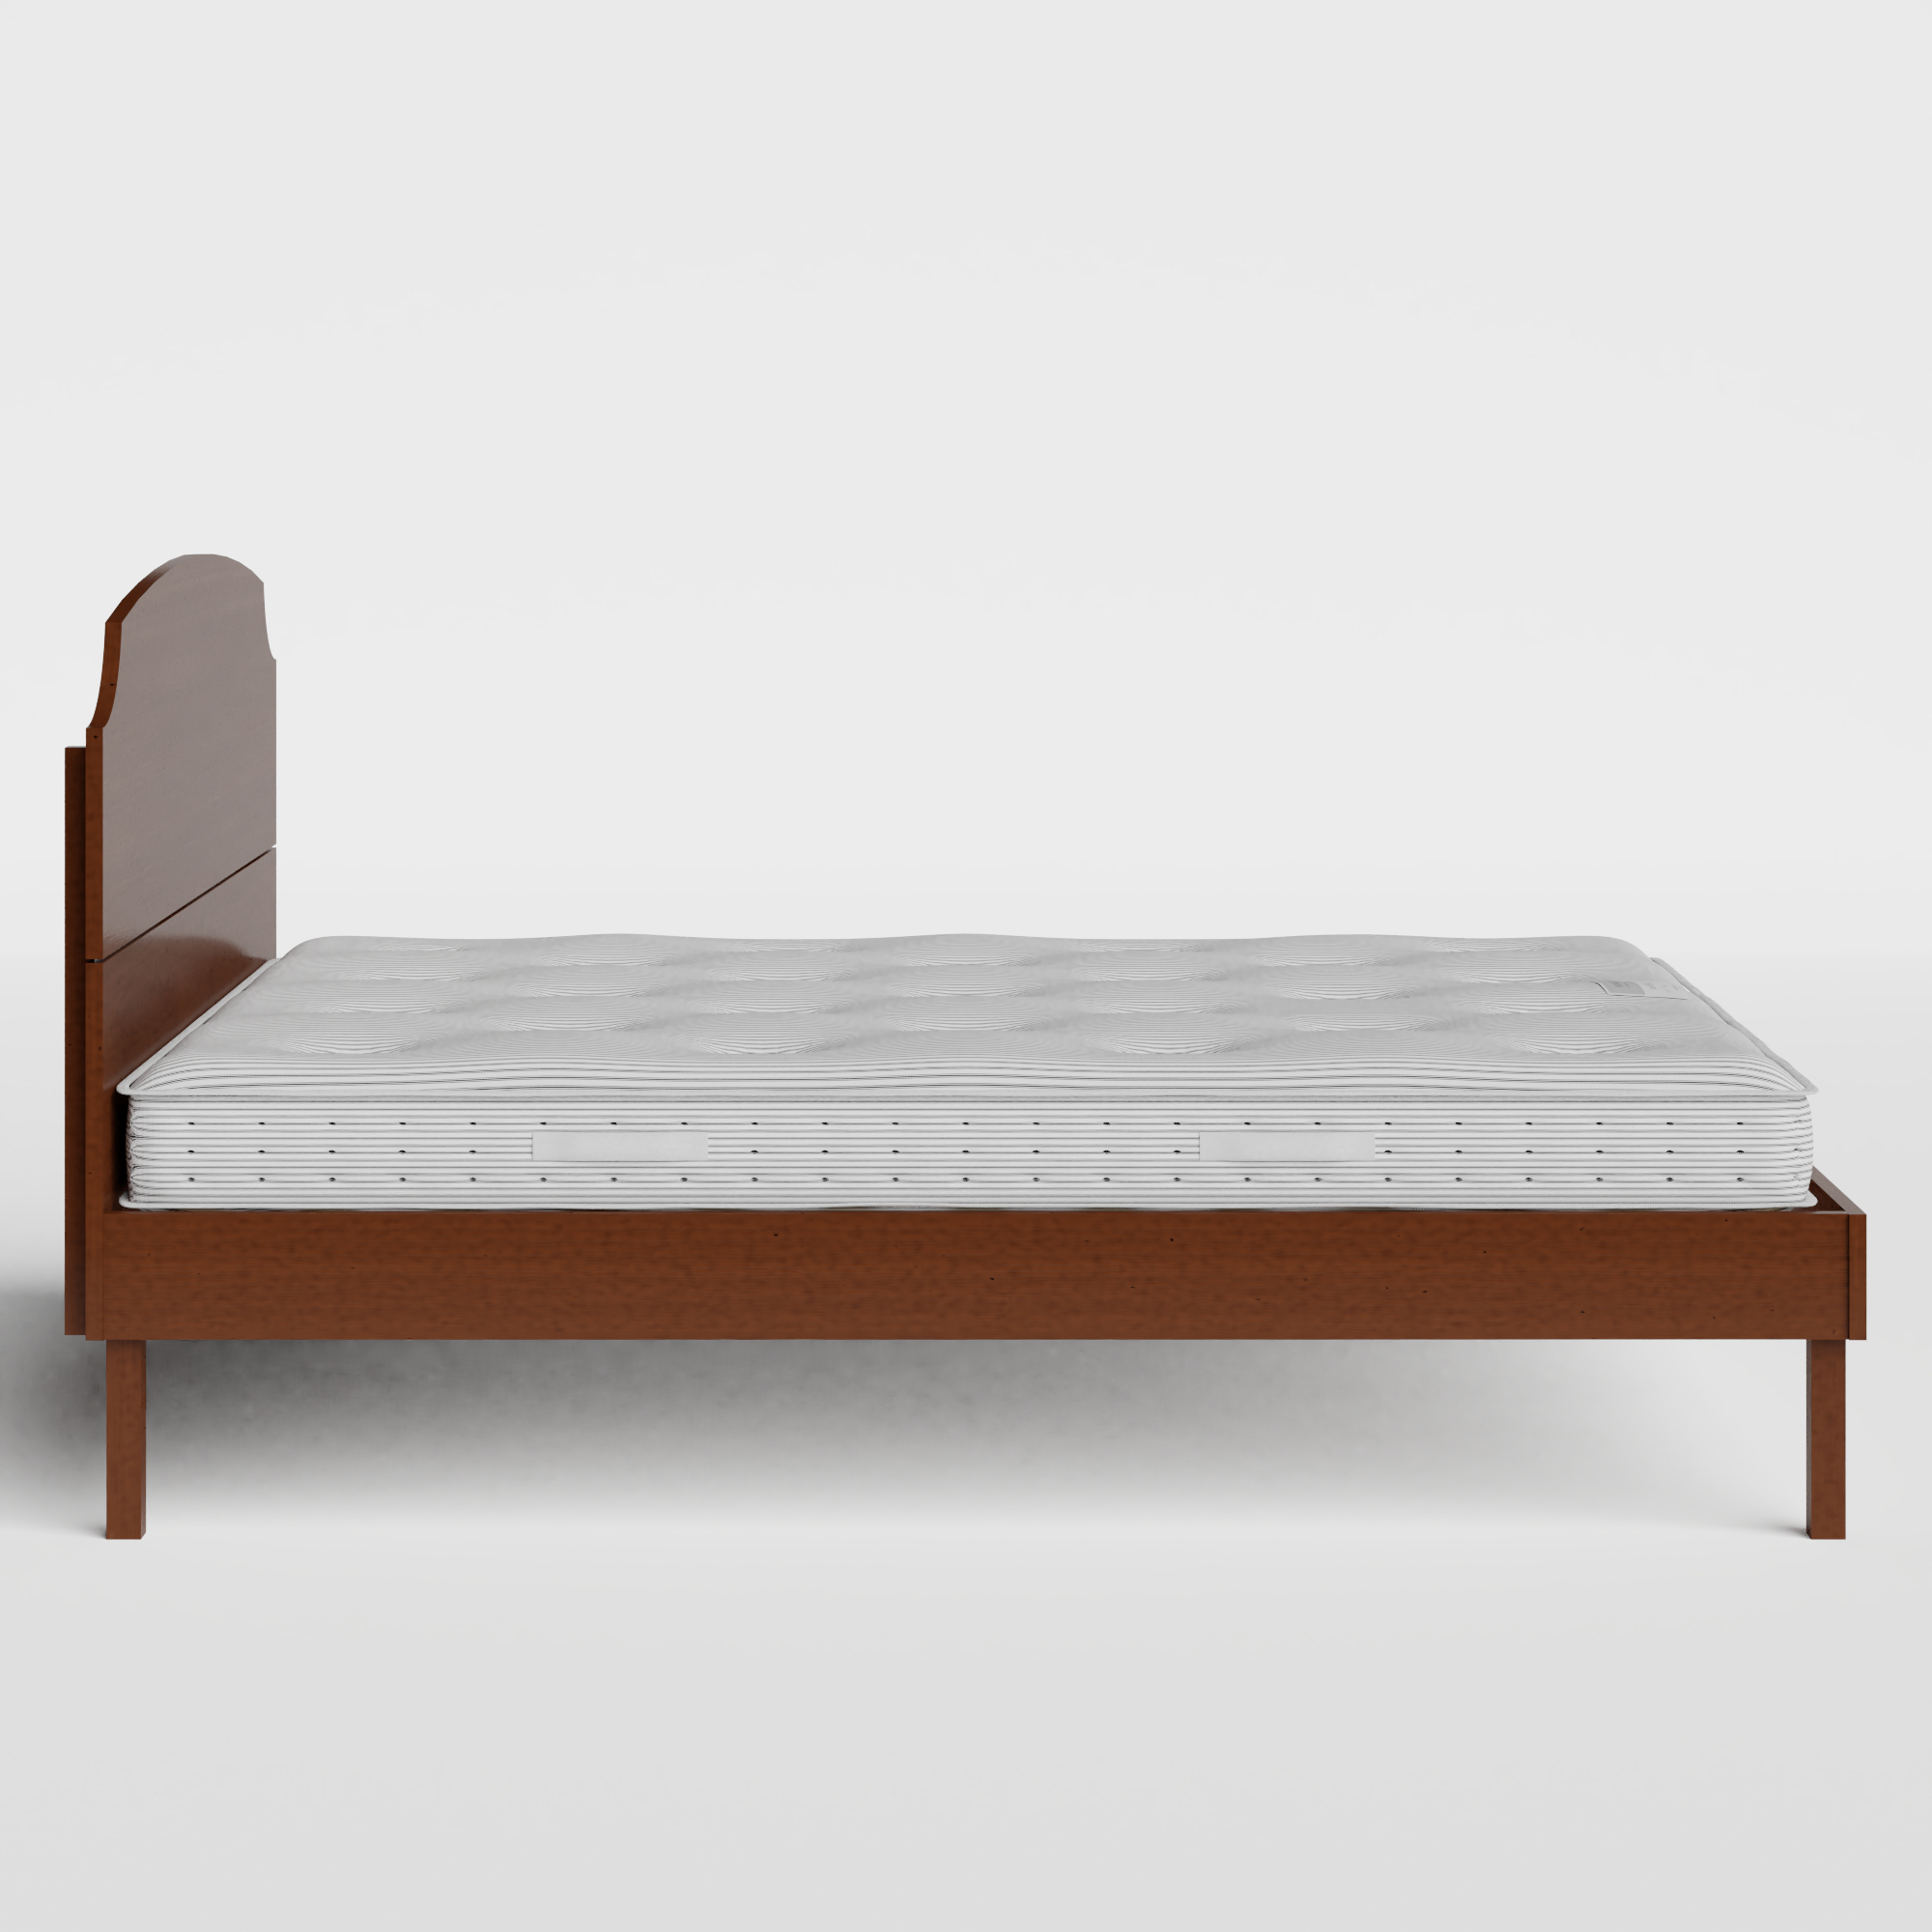 Kobe wood bed in dark cherry with Juno mattress